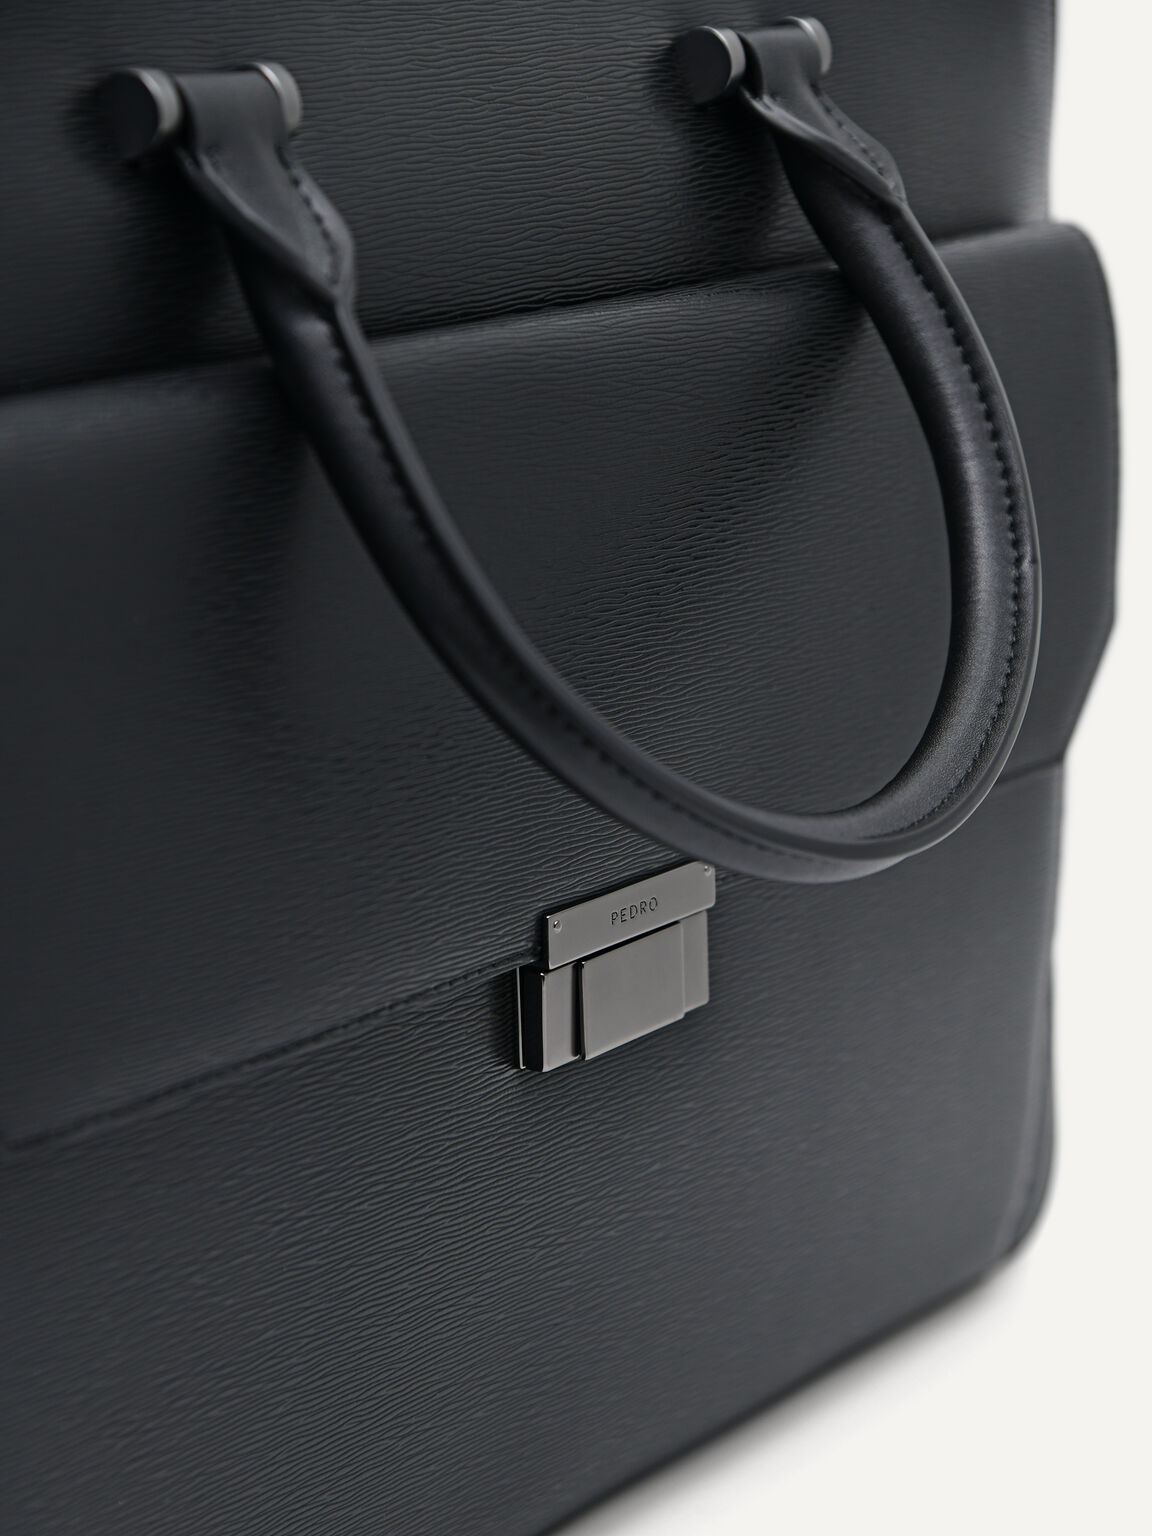 Henry Textured Leather Briefcase, Black, hi-res